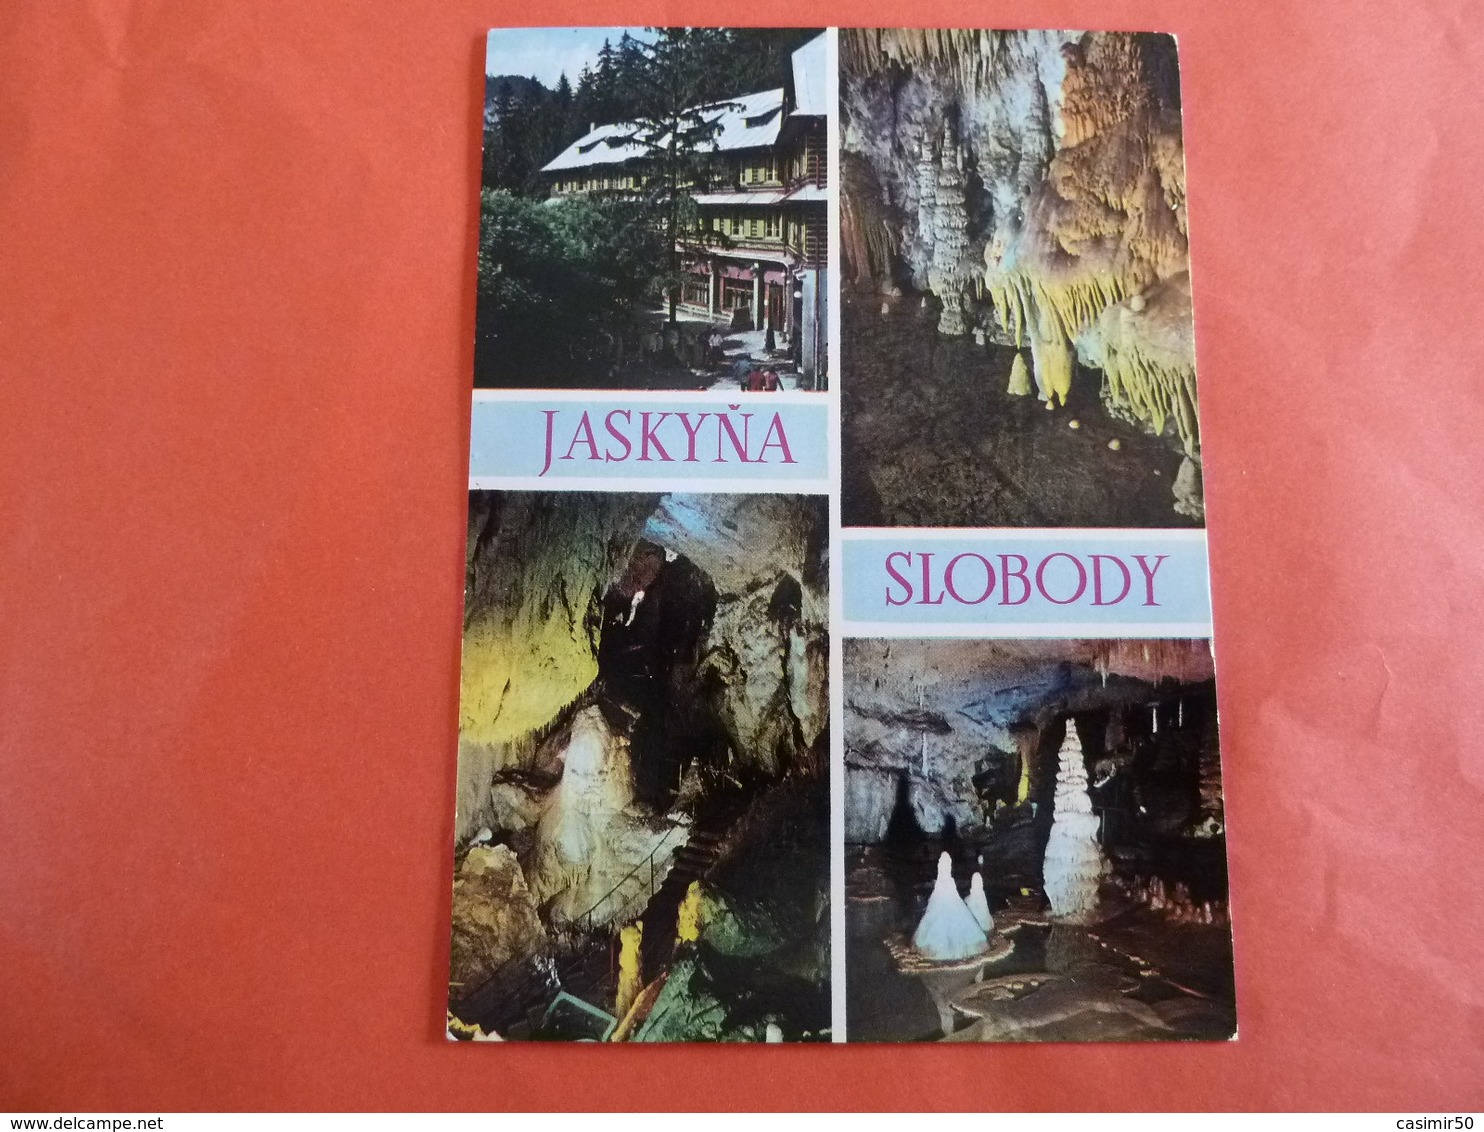 JASKYNA SLOBODY - Slovakia